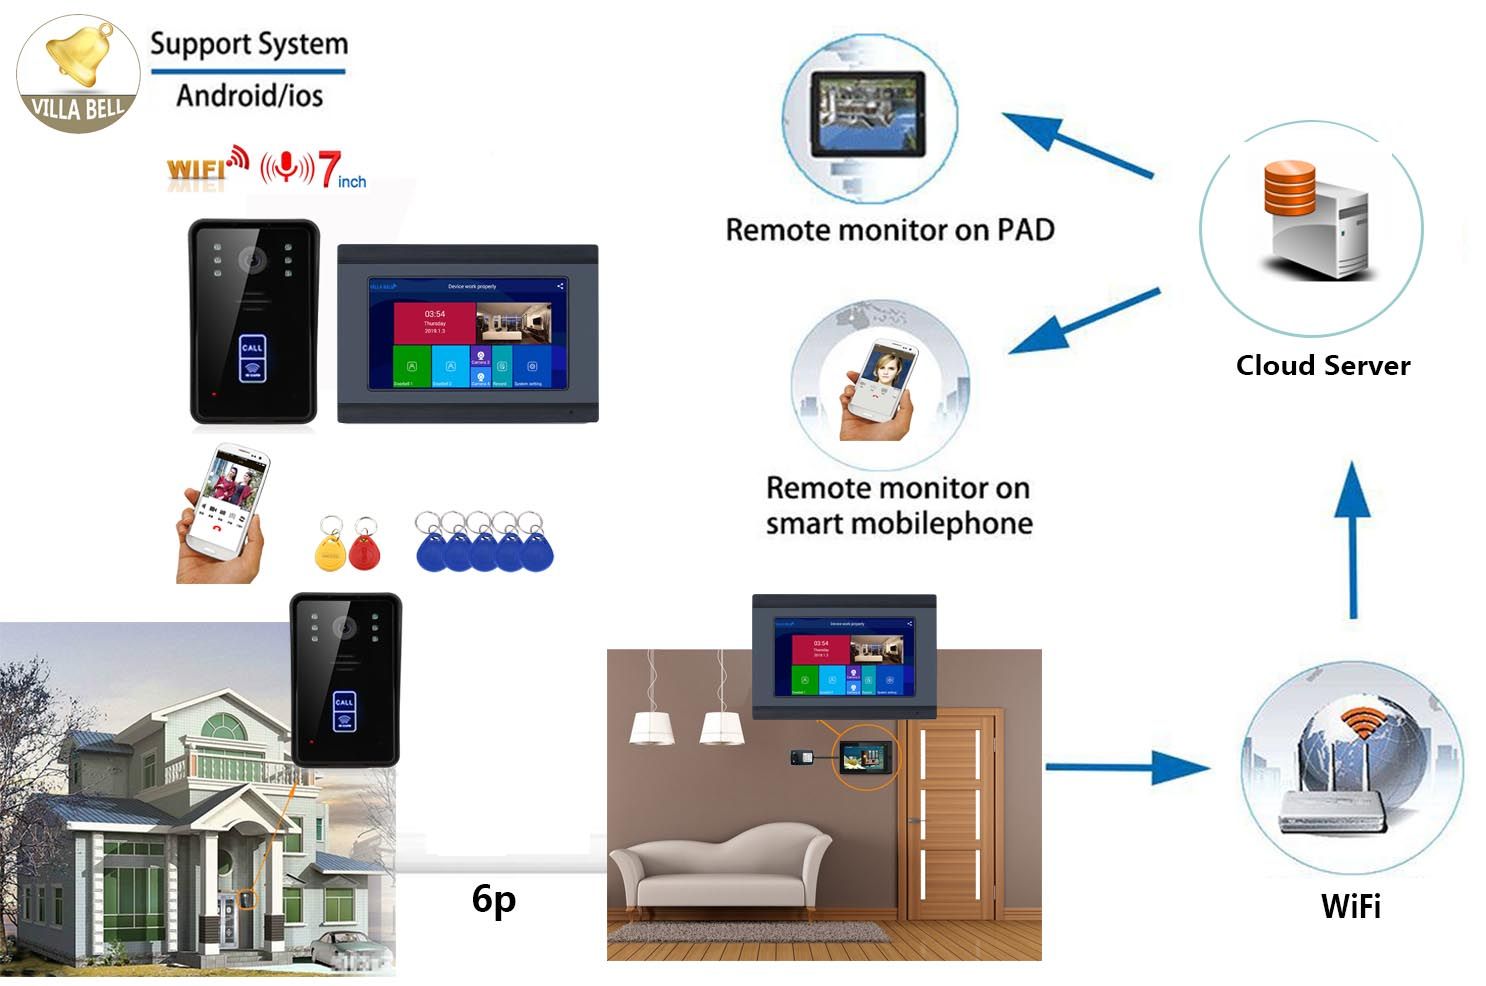 ENNIO-7inch-2-Monitors-Wifi-RFID-Video-Door-Phone-Doorbell-Intercom-Entry-System-with-Wired-IR-CUT-1-1624635